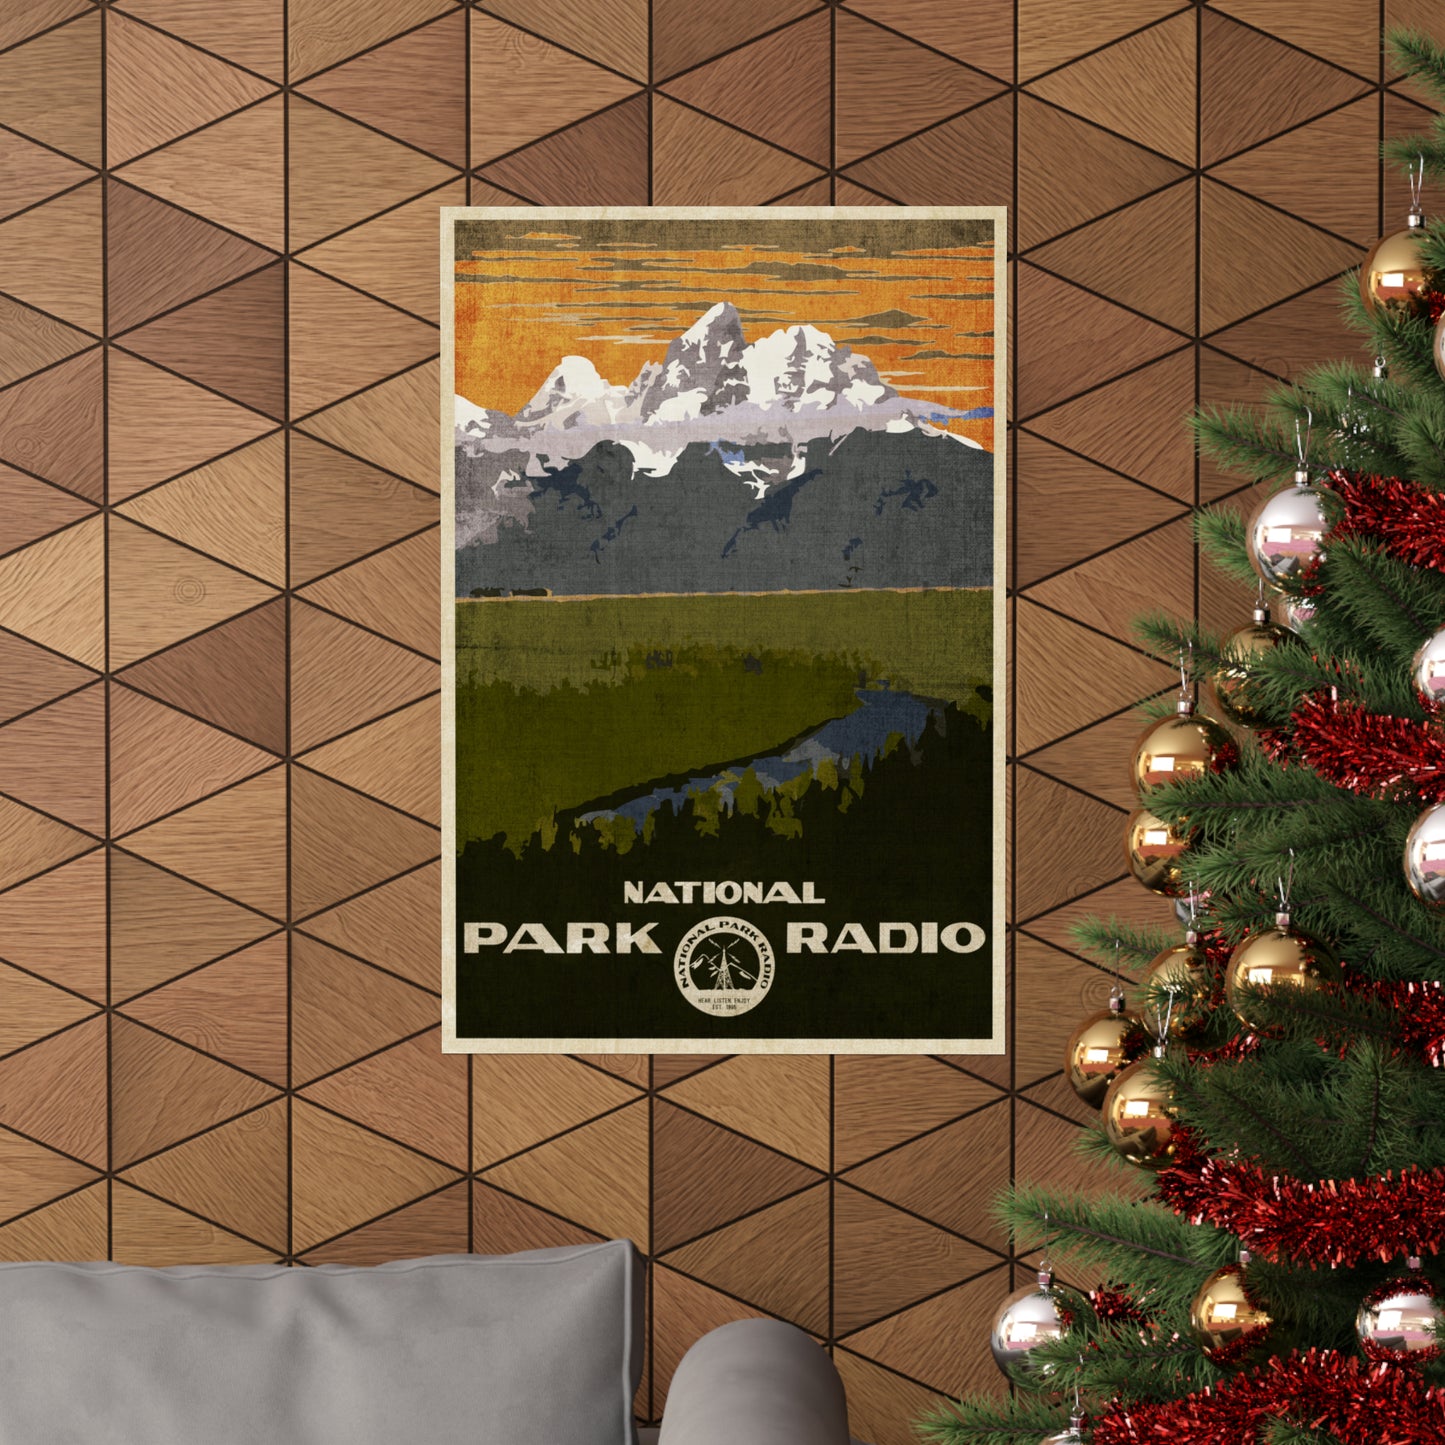 Original *Vintage* National Park Radio Poster - Grand Teton